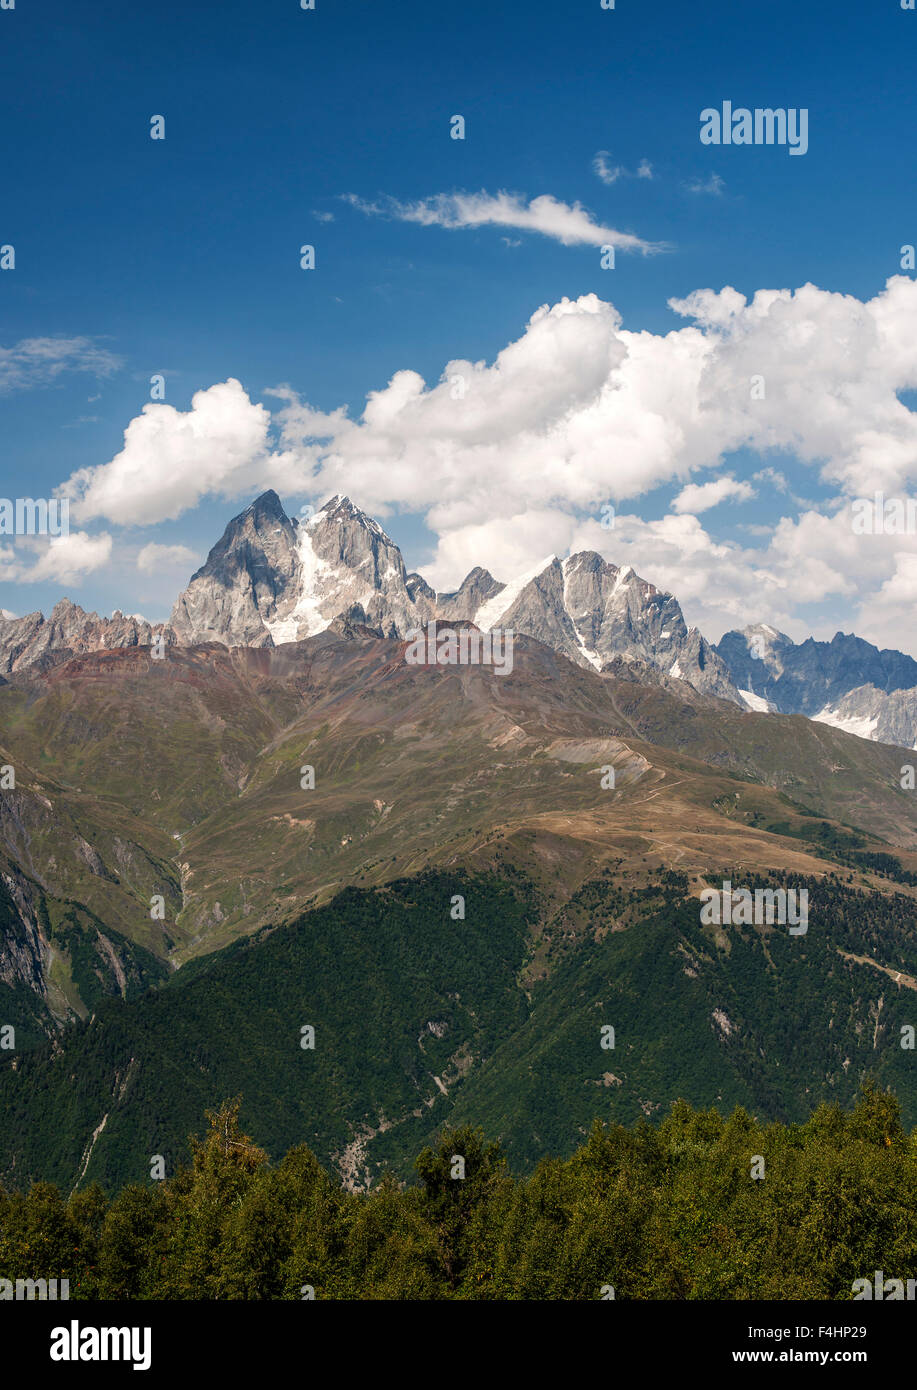 The twin peaks of Mount Ushba (4710m) in the Svaneti region of the Caucasus mountains in northwestern Georgia. Stock Photo